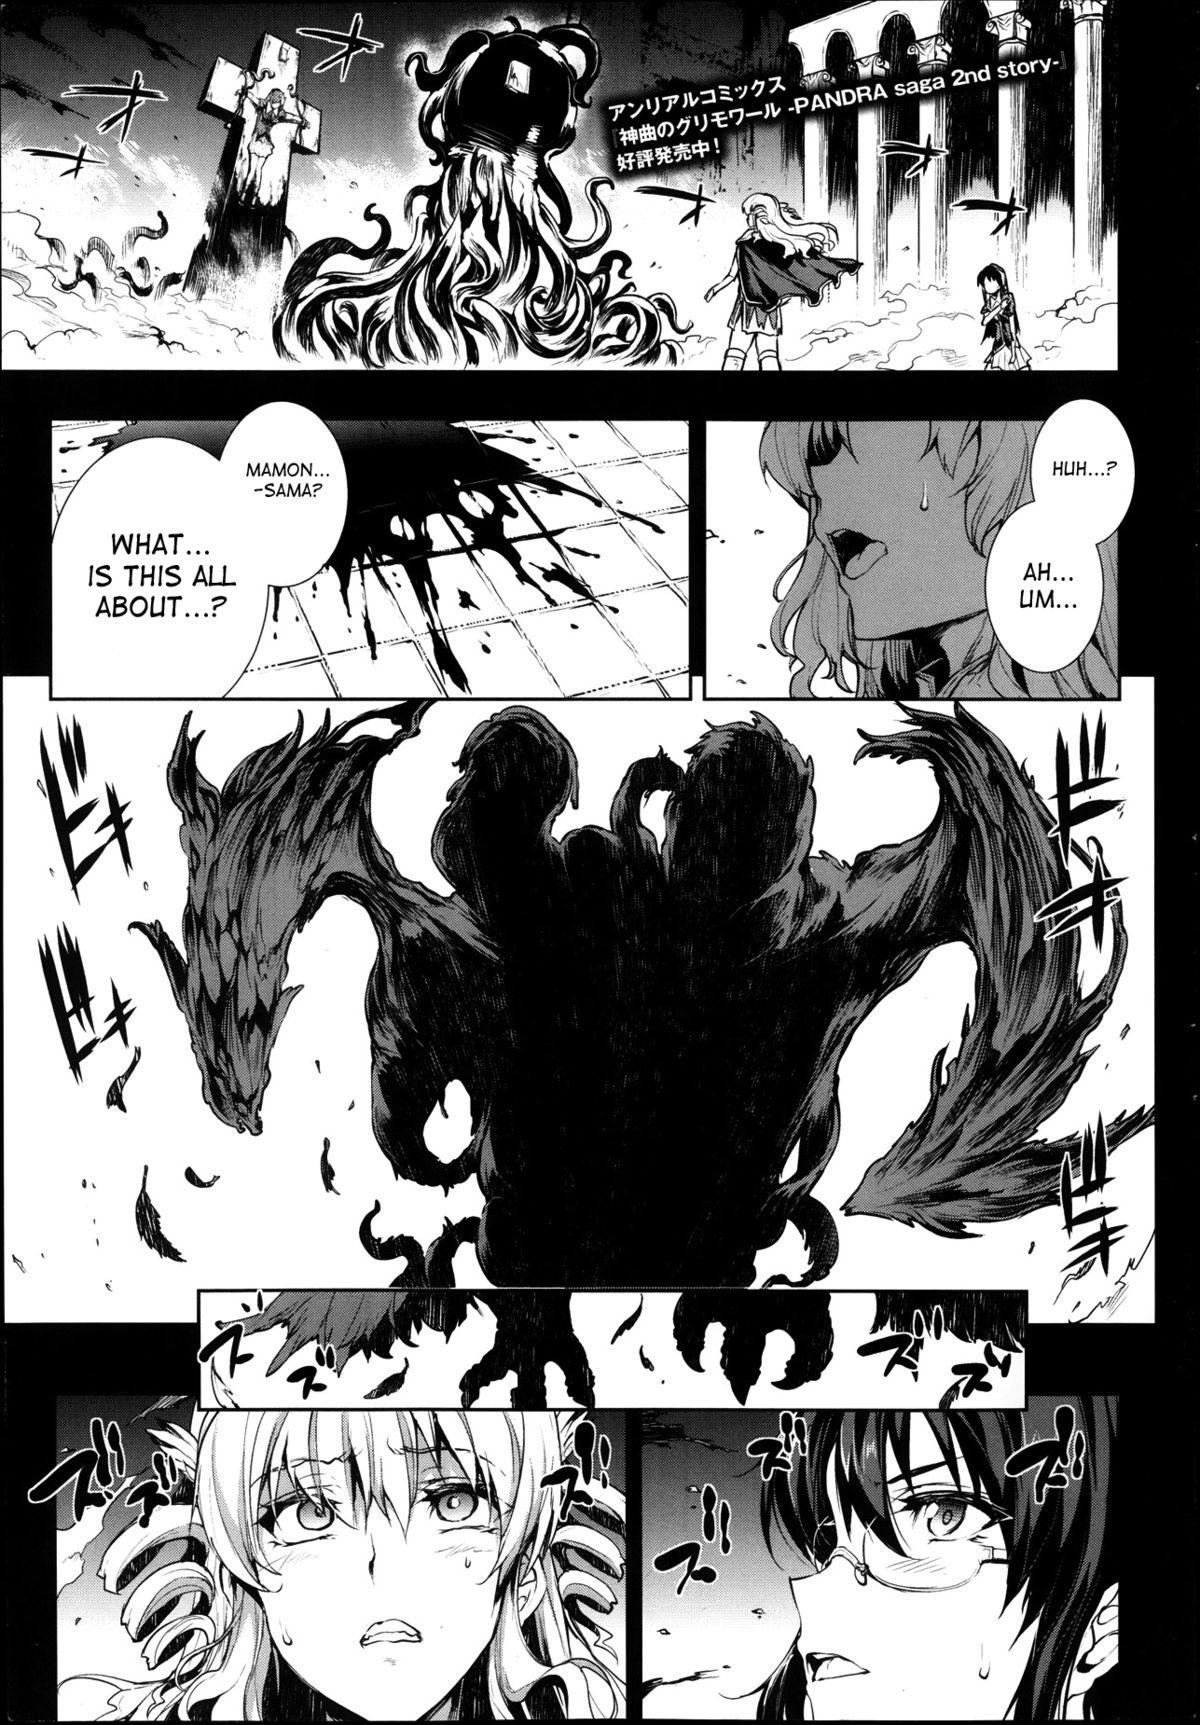 [ERECT TOUCH (Erect Sawaru)] Shinkyoku no Grimoire -PANDRA saga 2nd story- Ch 01-12 + Side Story x 3 [English] [SaHa] 248